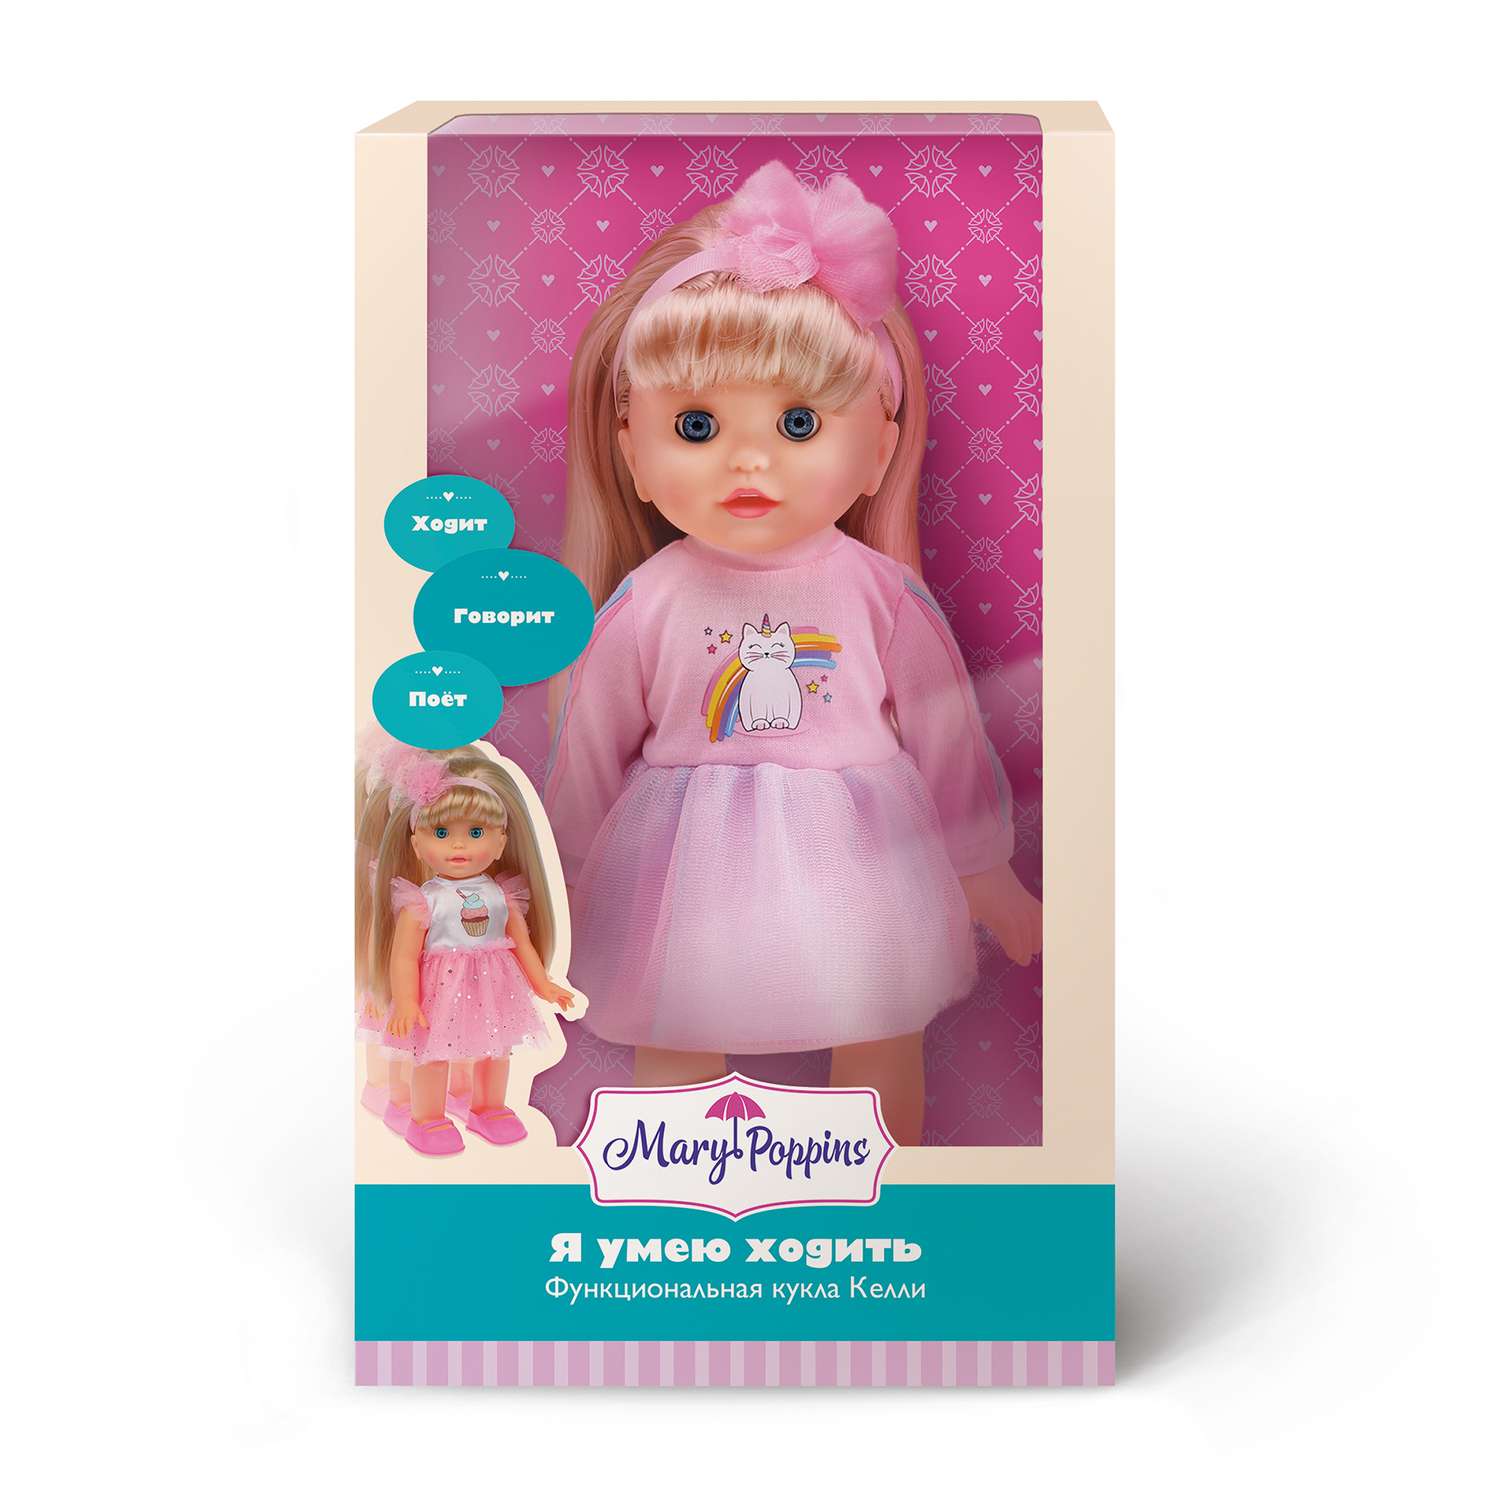 Кукла для девочки Mary Poppins интерактивная. Ходит 451353 - фото 3